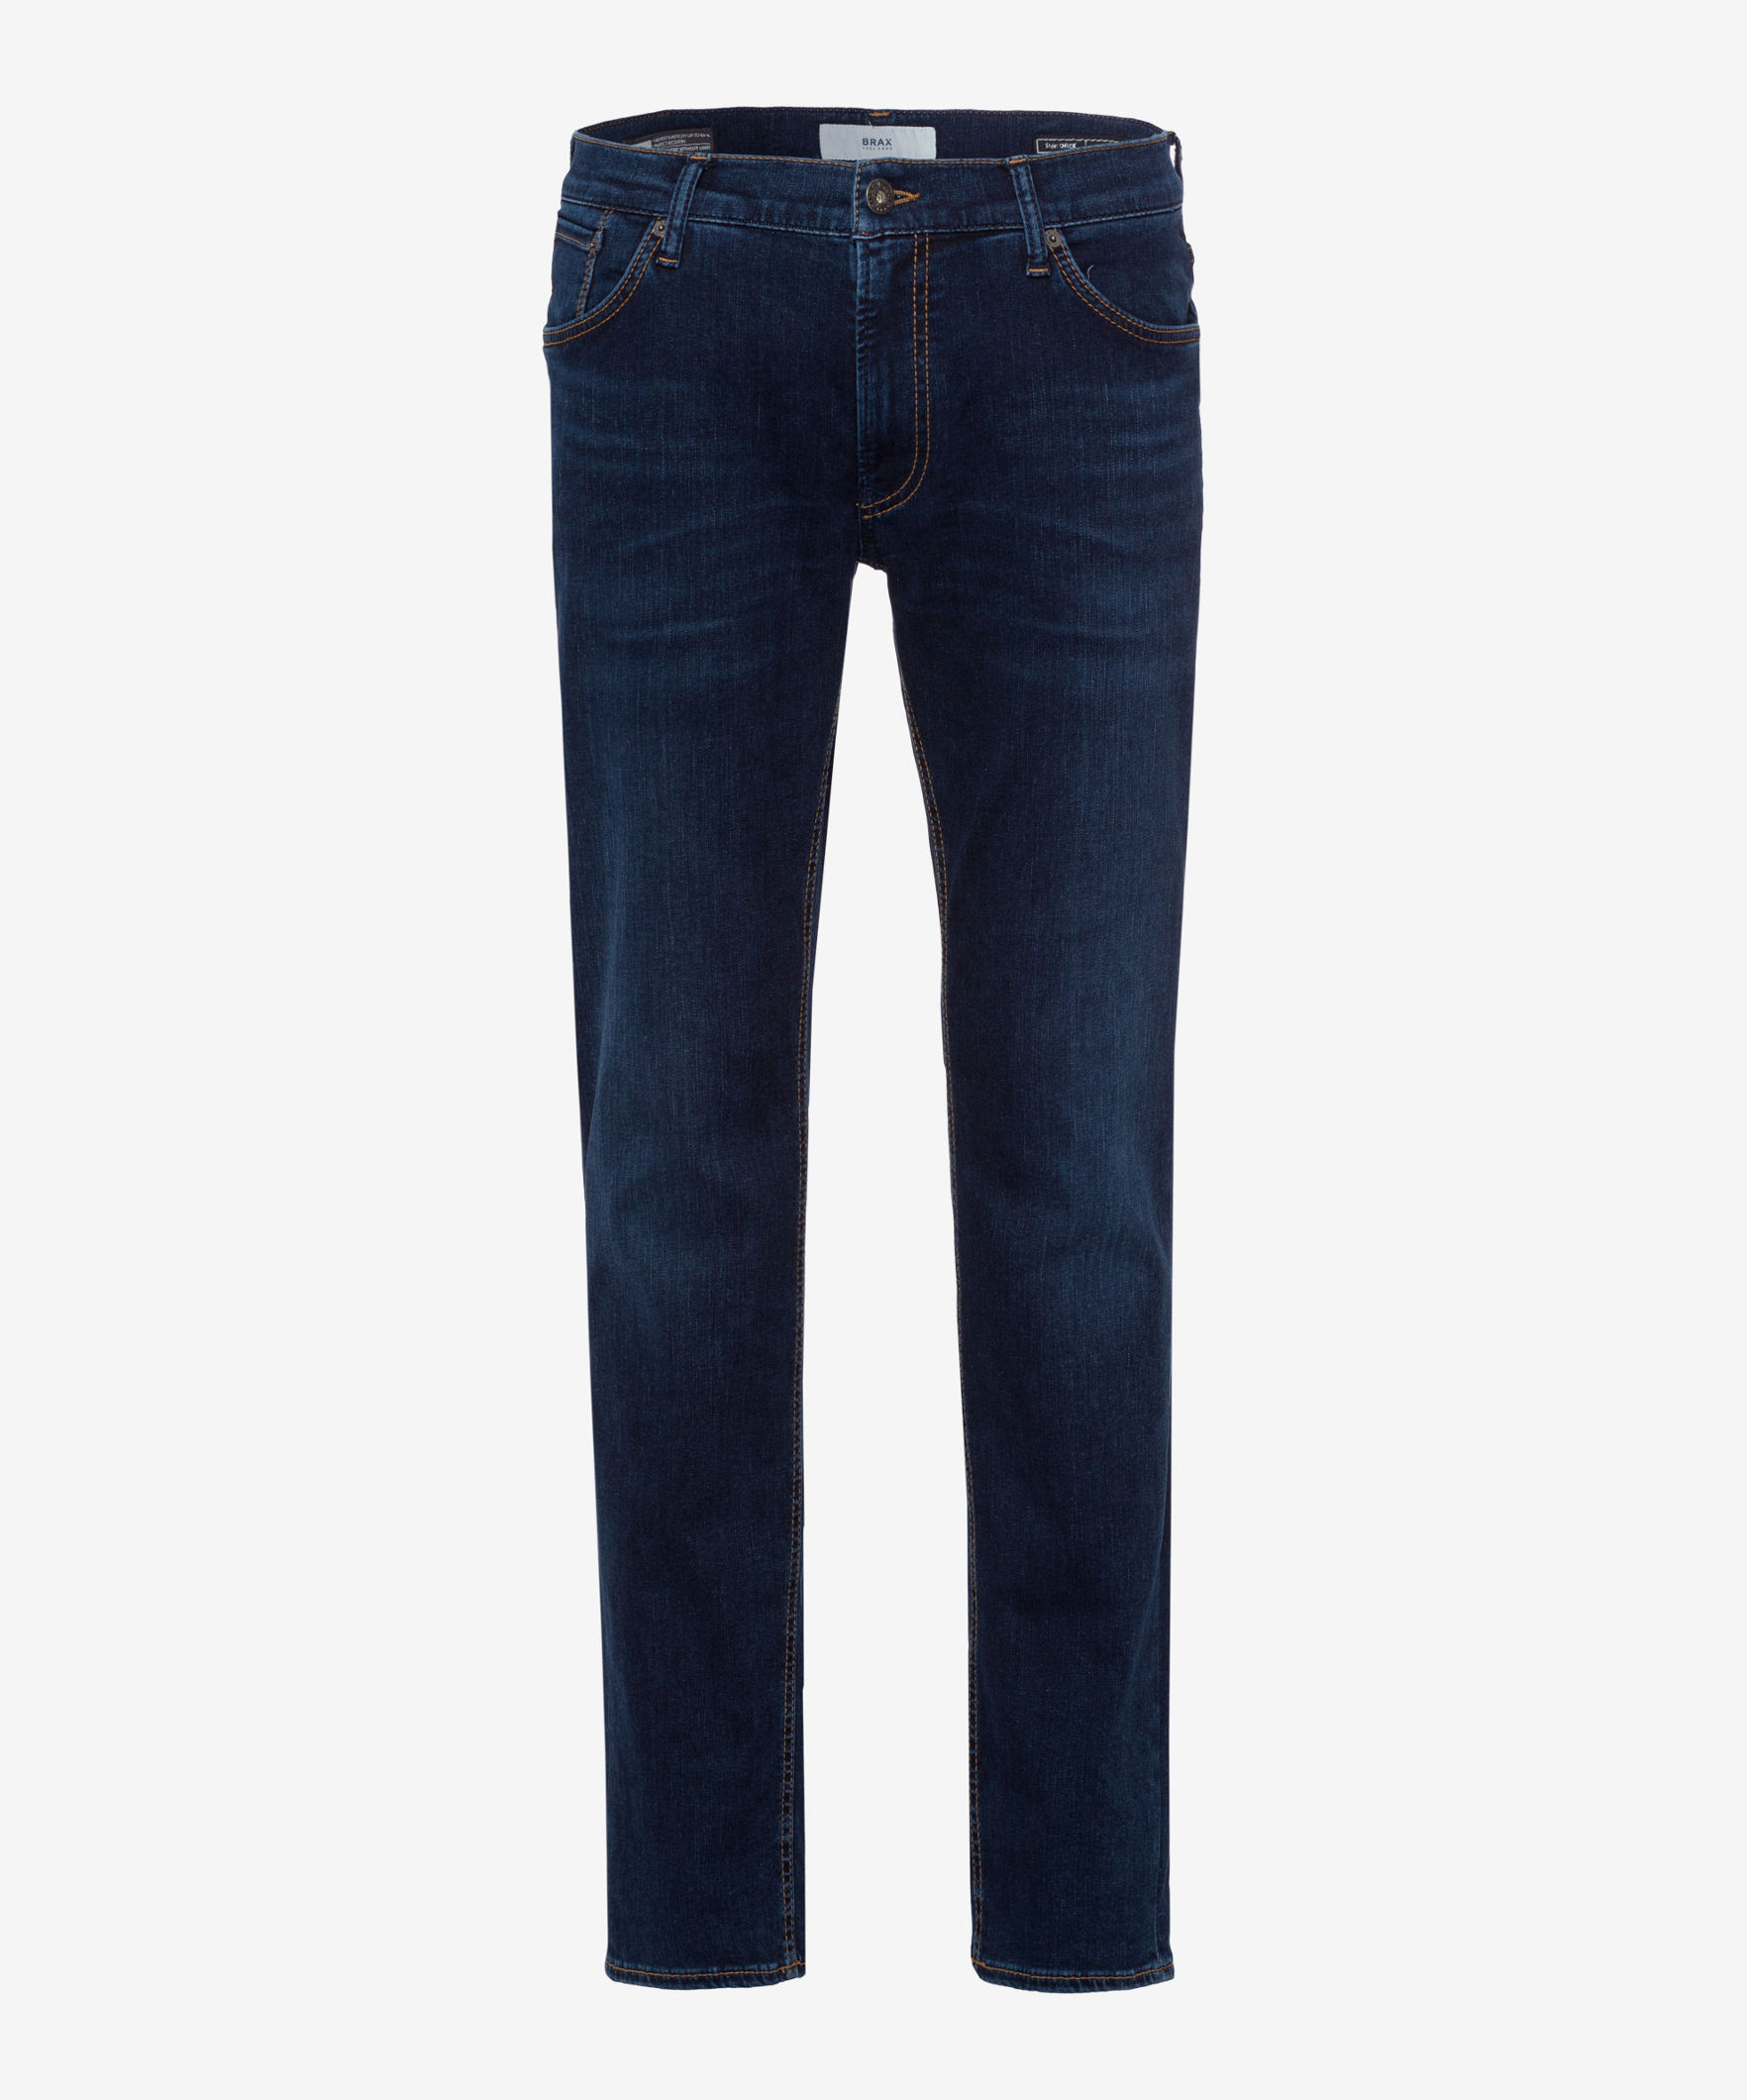 Brax Chuck Hi-Flex Jeans Vintage Blue Used | Jan Rozing Men's Fashion